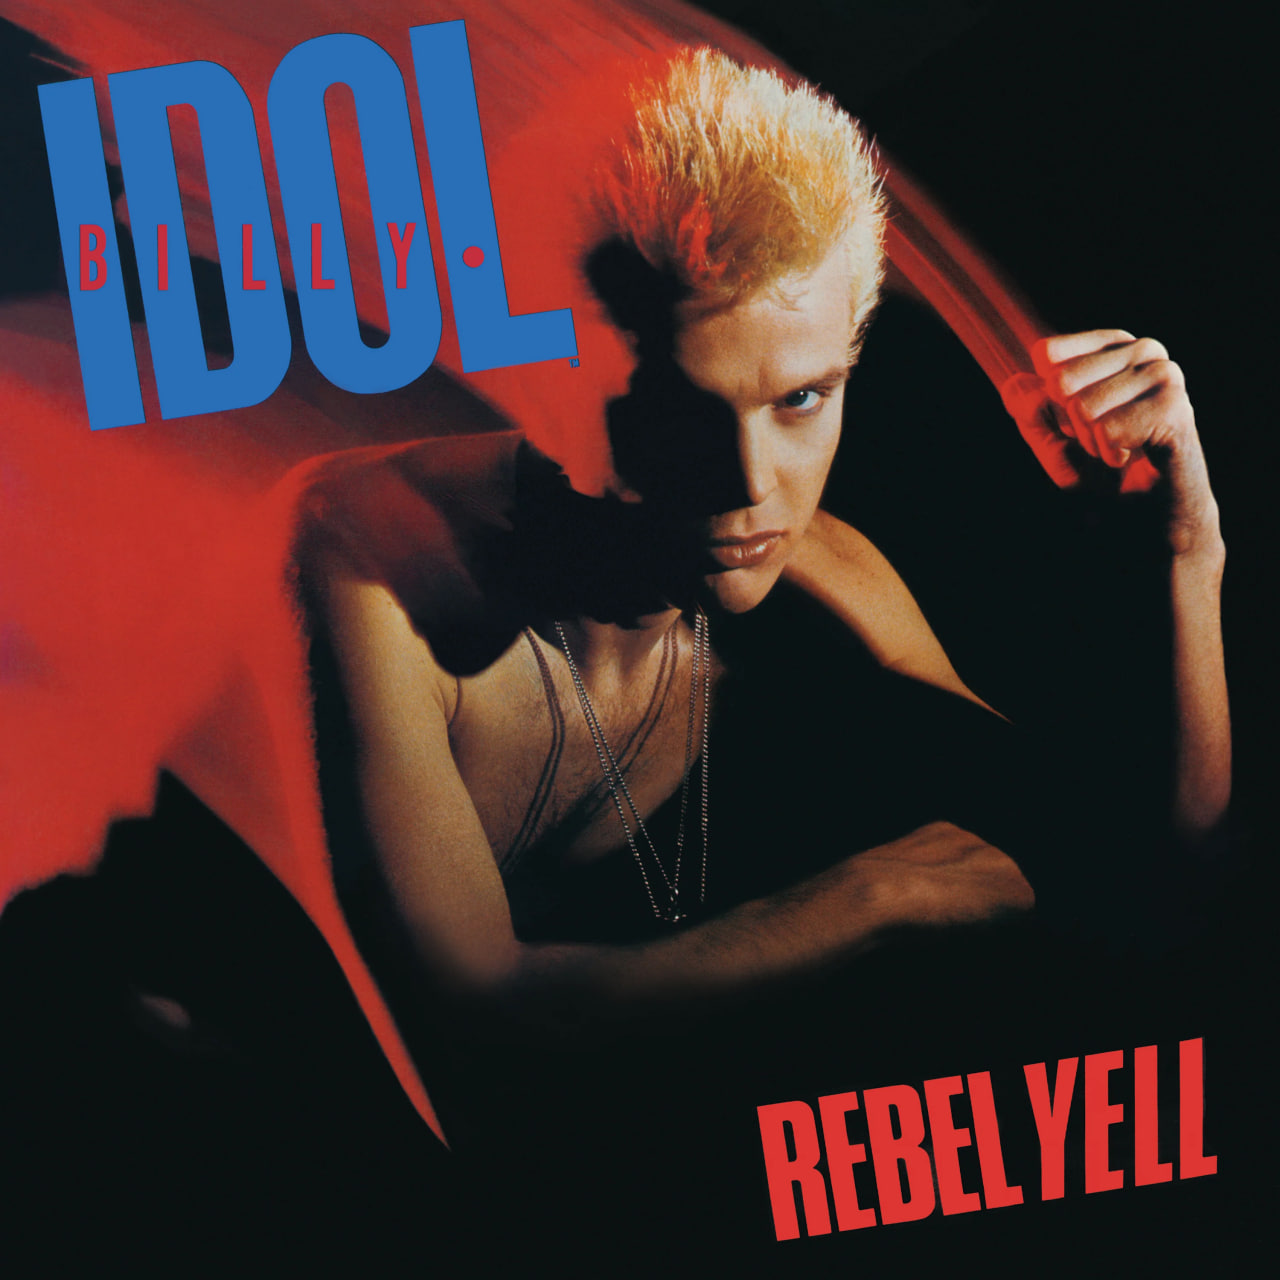 Рок Universal (Aus) Idol, Billy - Rebel Yell (40th Anniversary Expanded edition Black Vinyl 2LP) гибкая тяга канат rebel r mb tpdr d